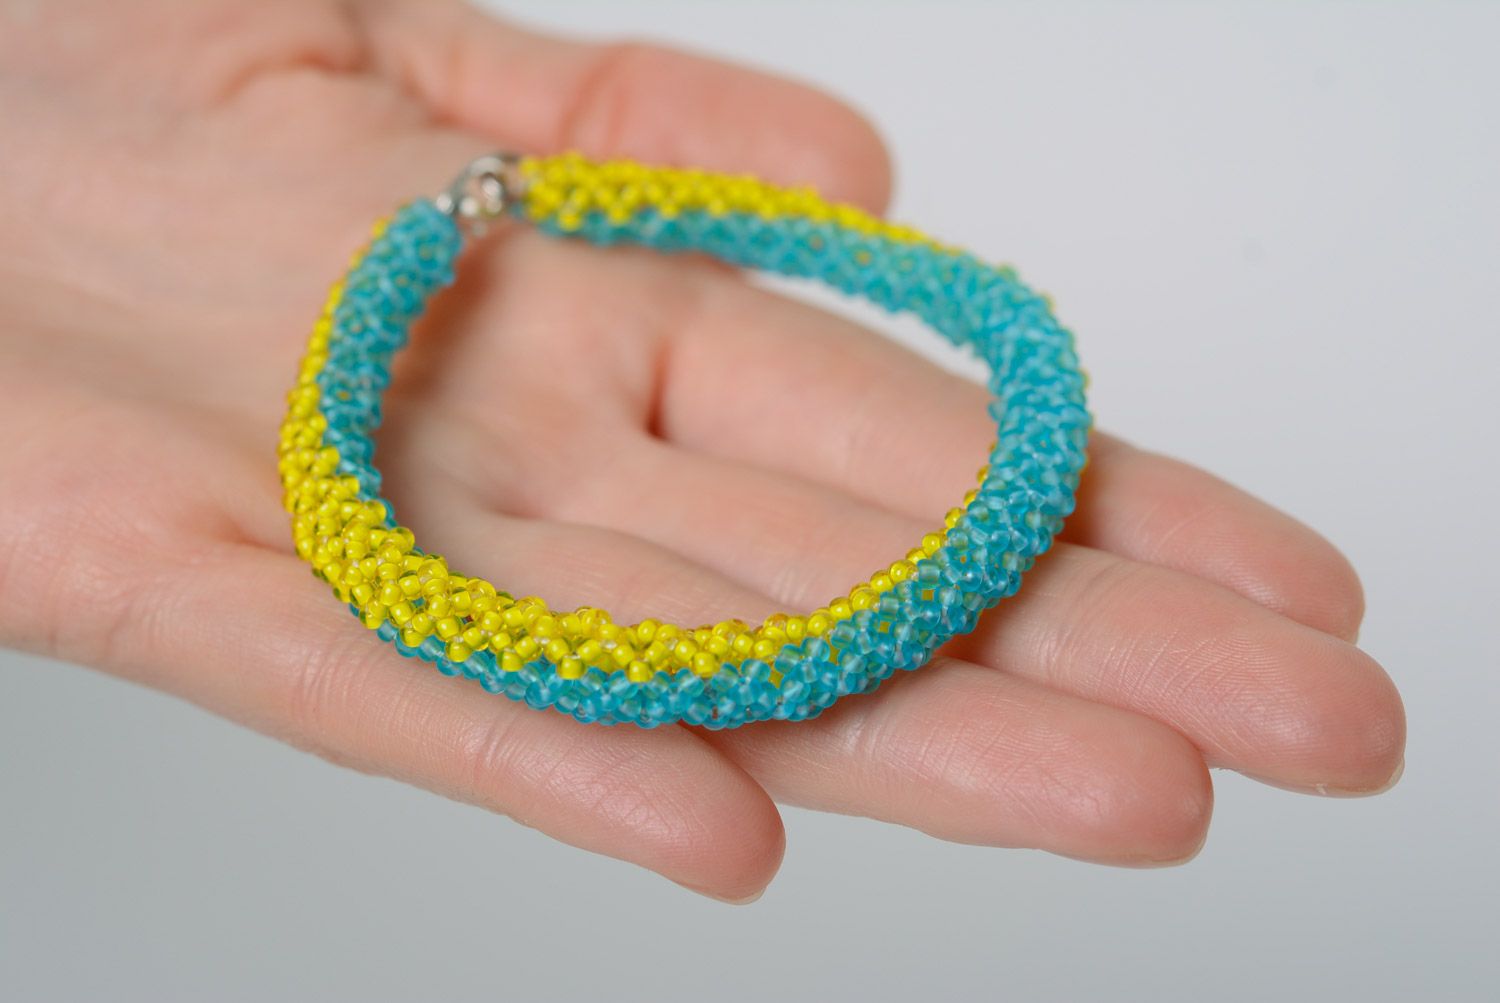 Thin handmade wrist bracelet woven of yellow and blue beads in Ukrainian style photo 2